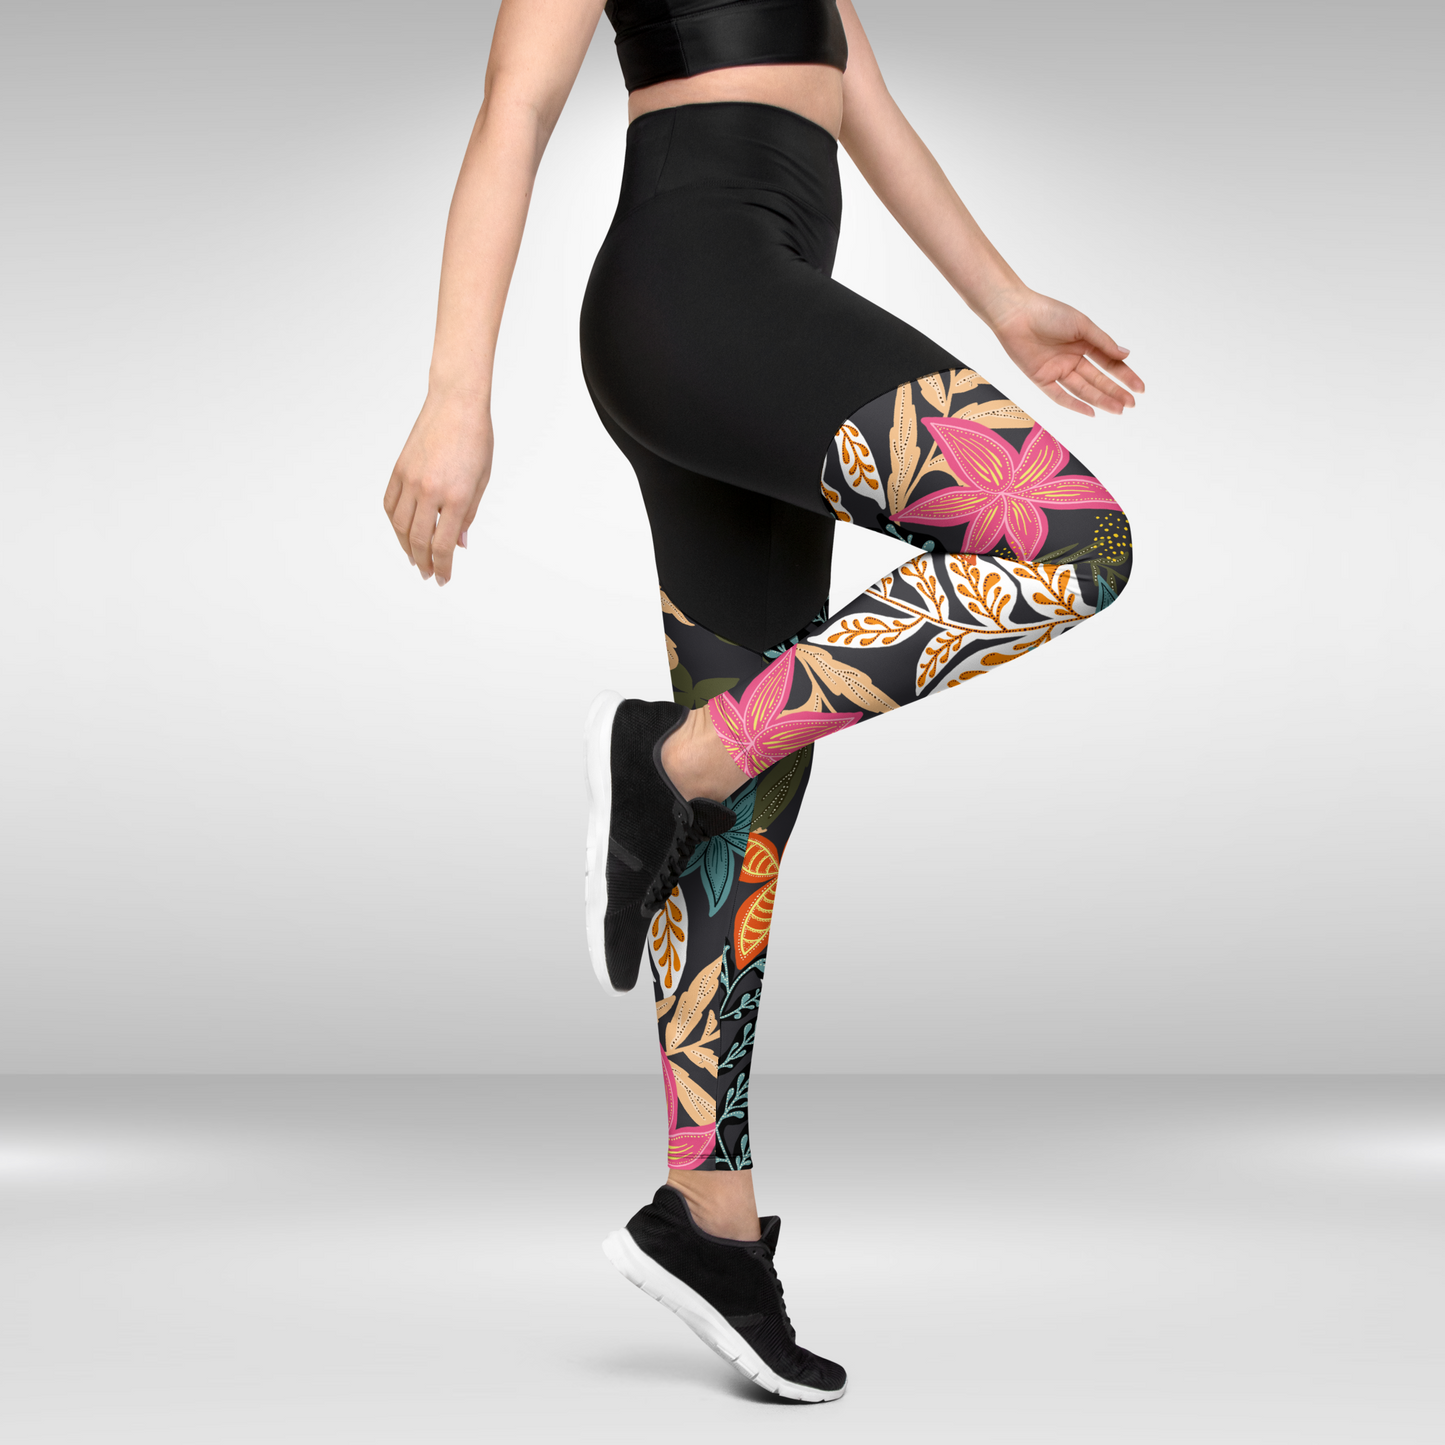 Women Compression Legging - Marine Floral Print